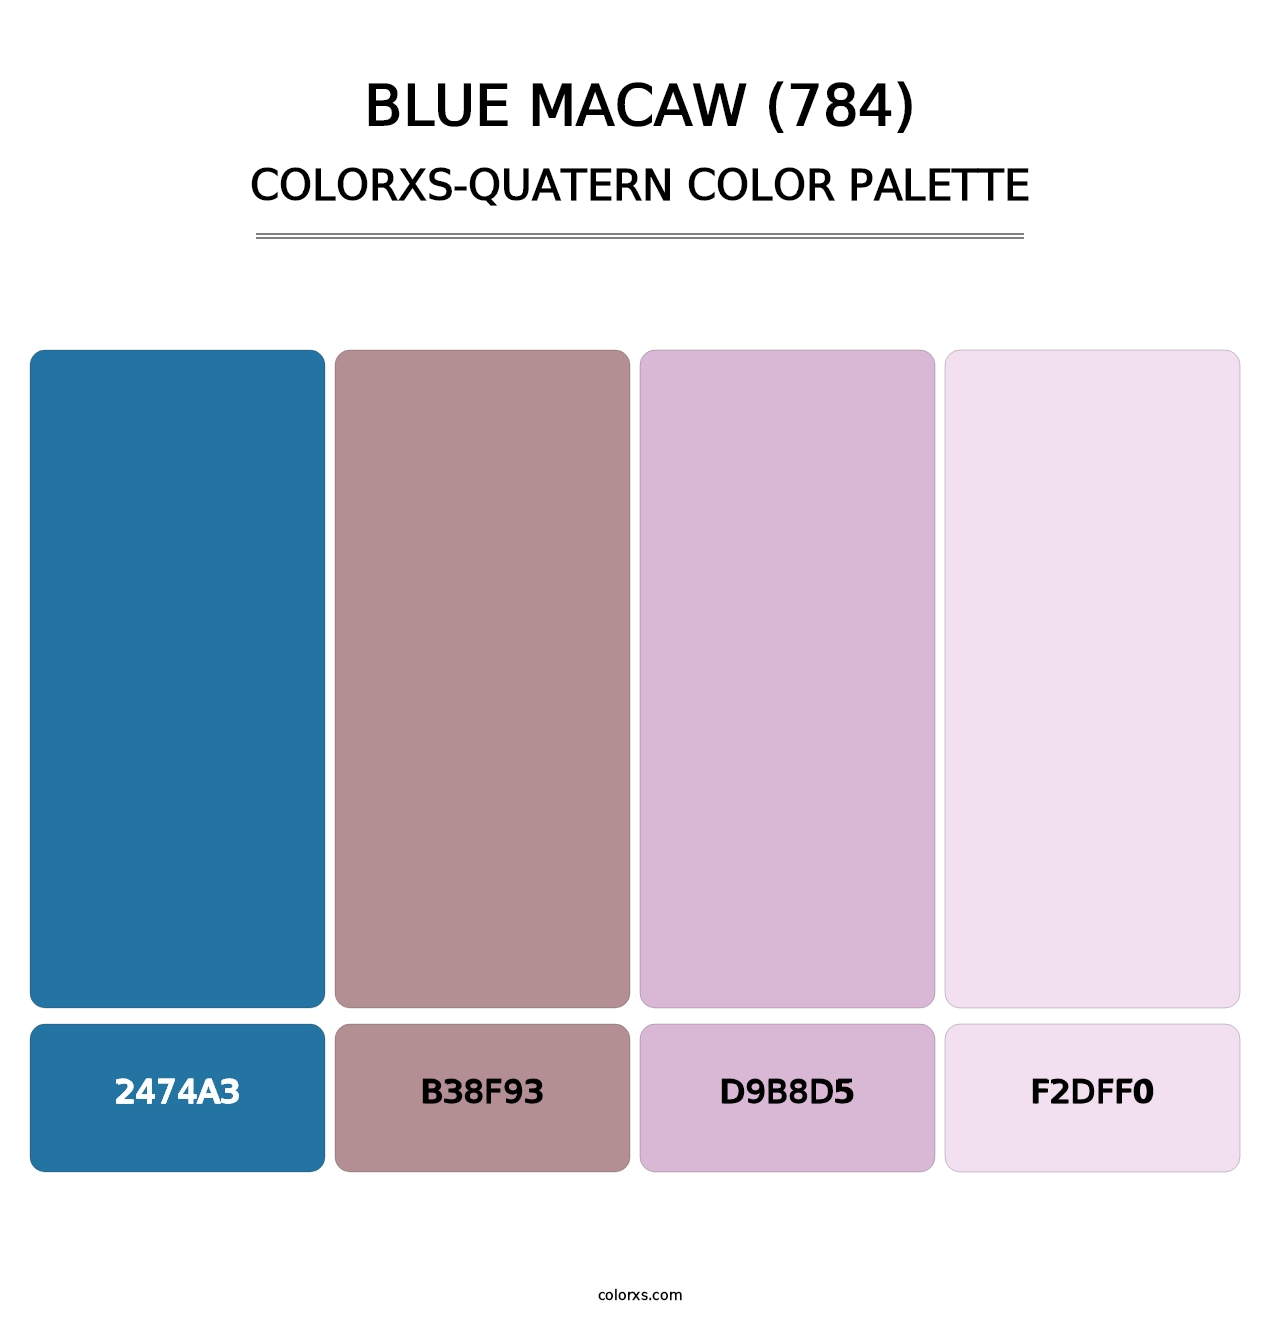 Blue Macaw (784) - Colorxs Quatern Palette